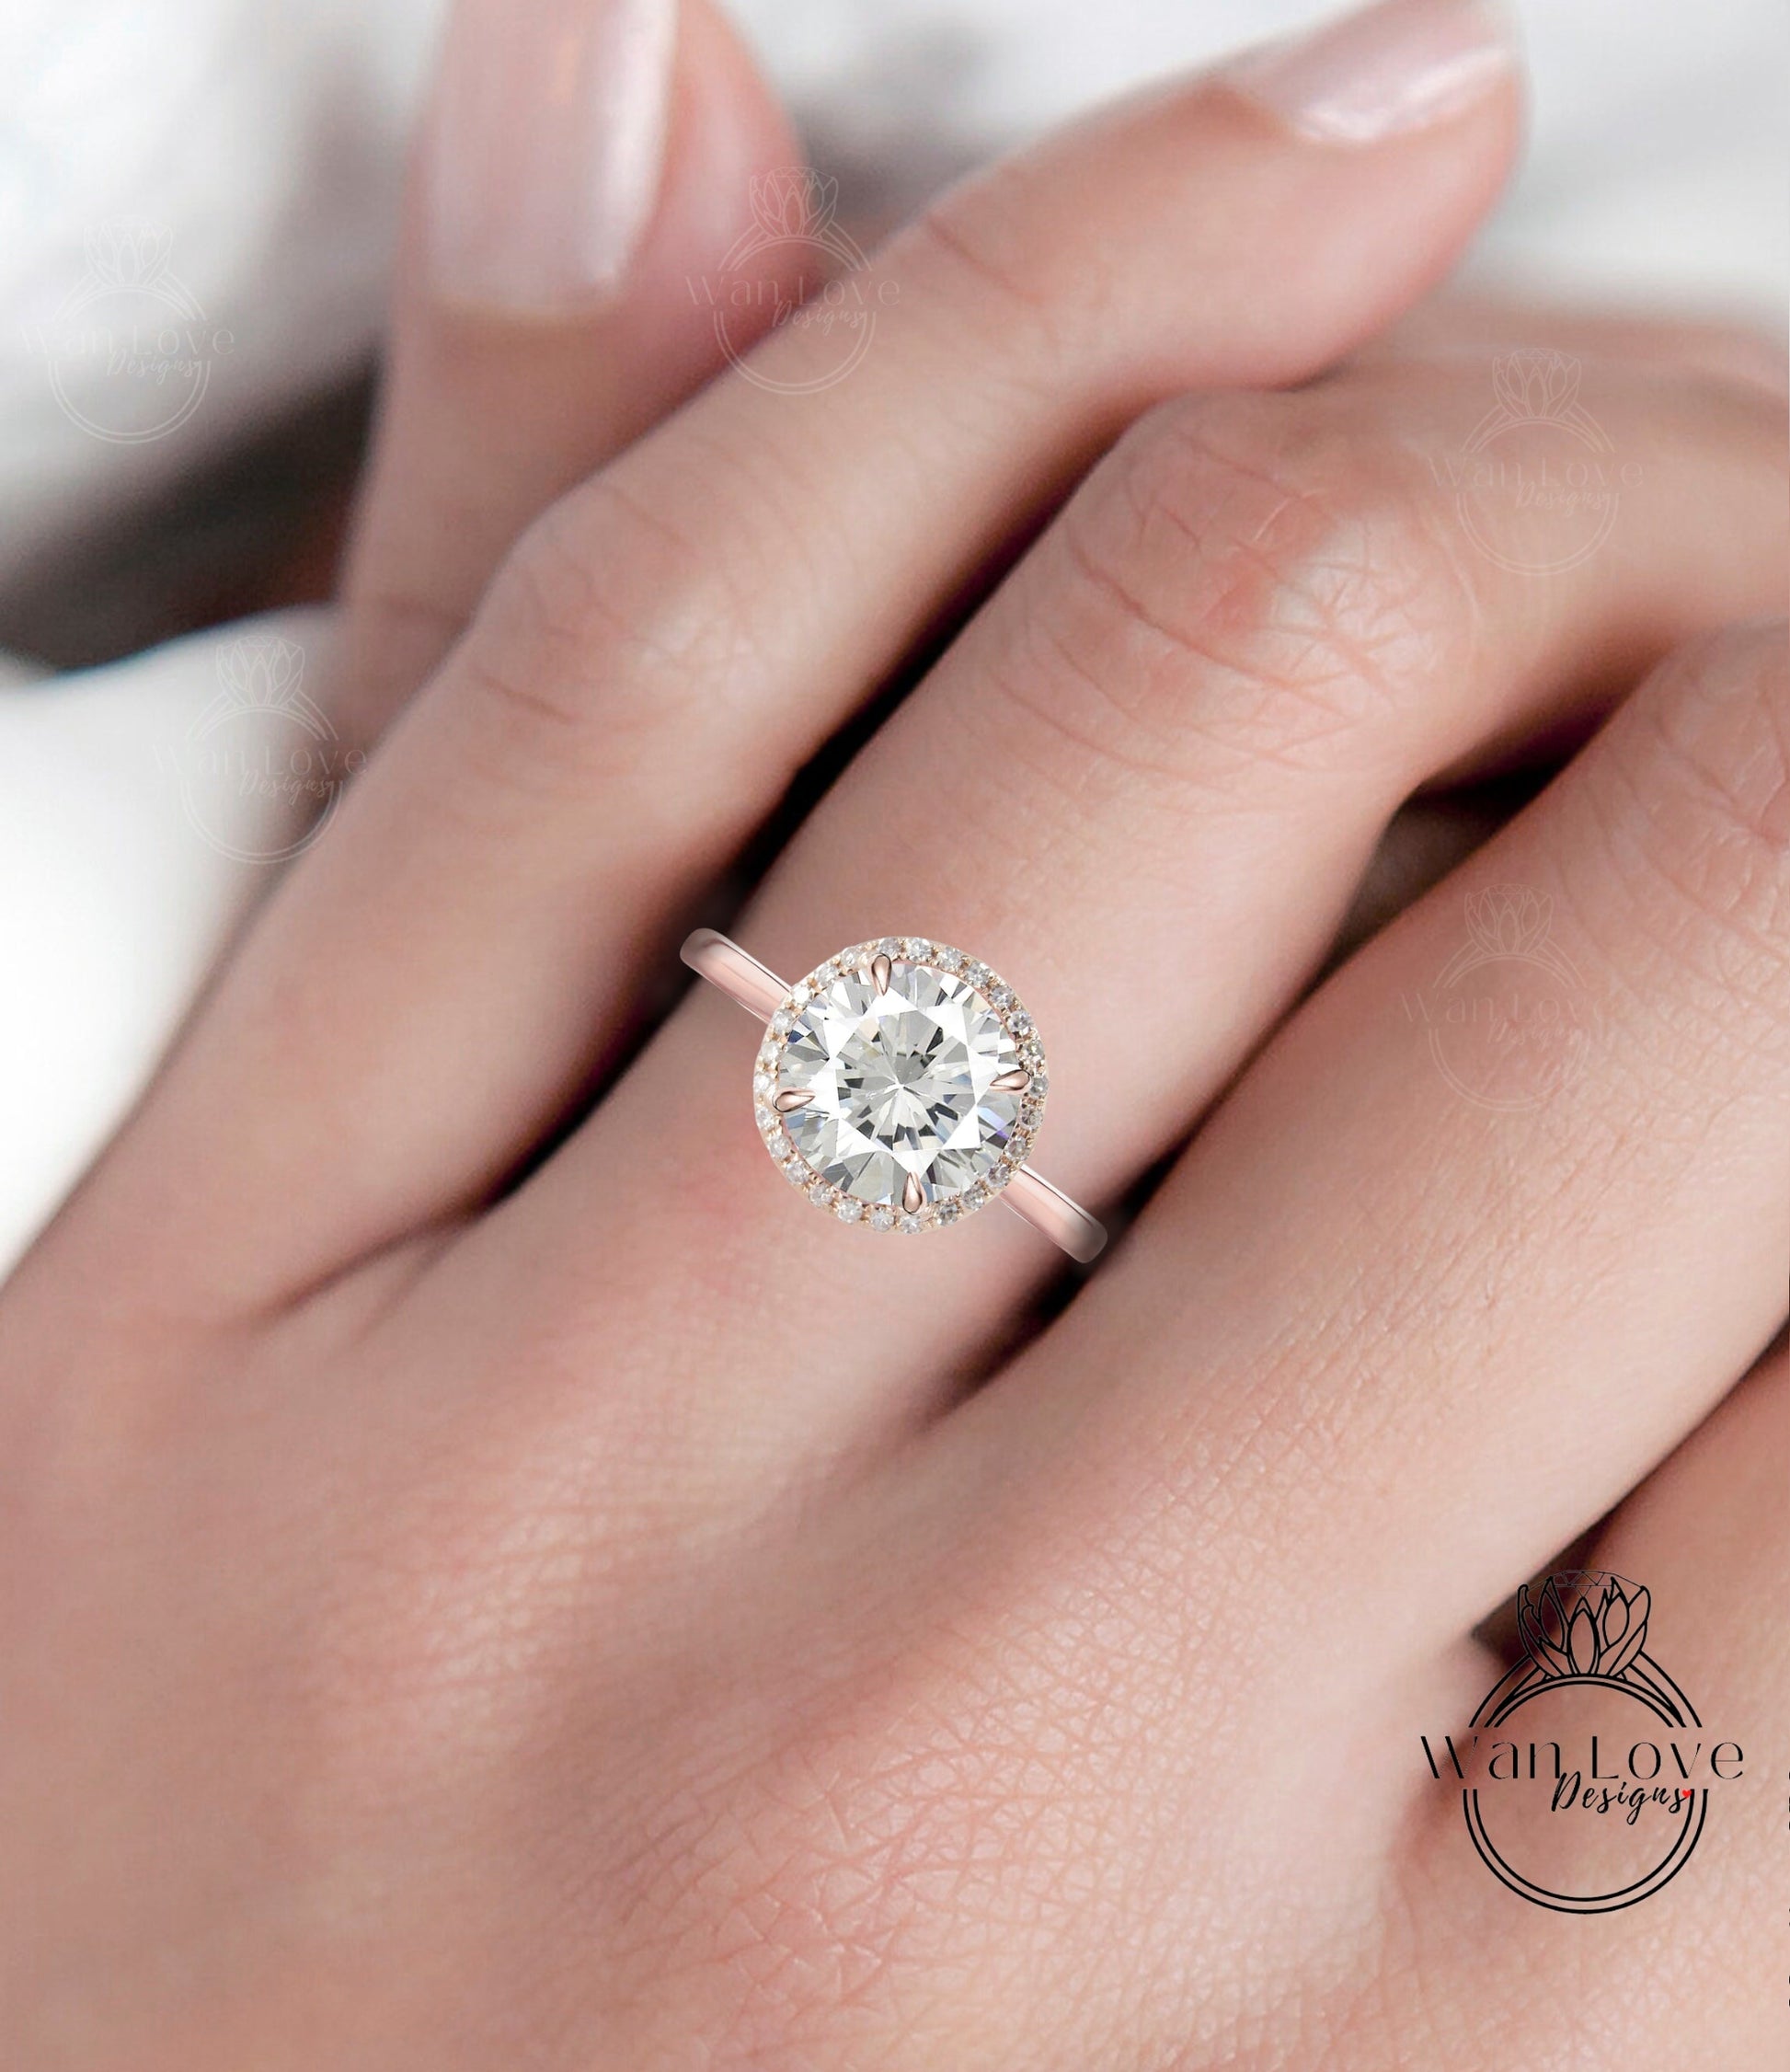 Diamond Halo plain band Engagement Ring, tapered band Round Diamond Halo Ring, Solid 14k gold engagement ring with IGI lab diamonds Wan Love Designs